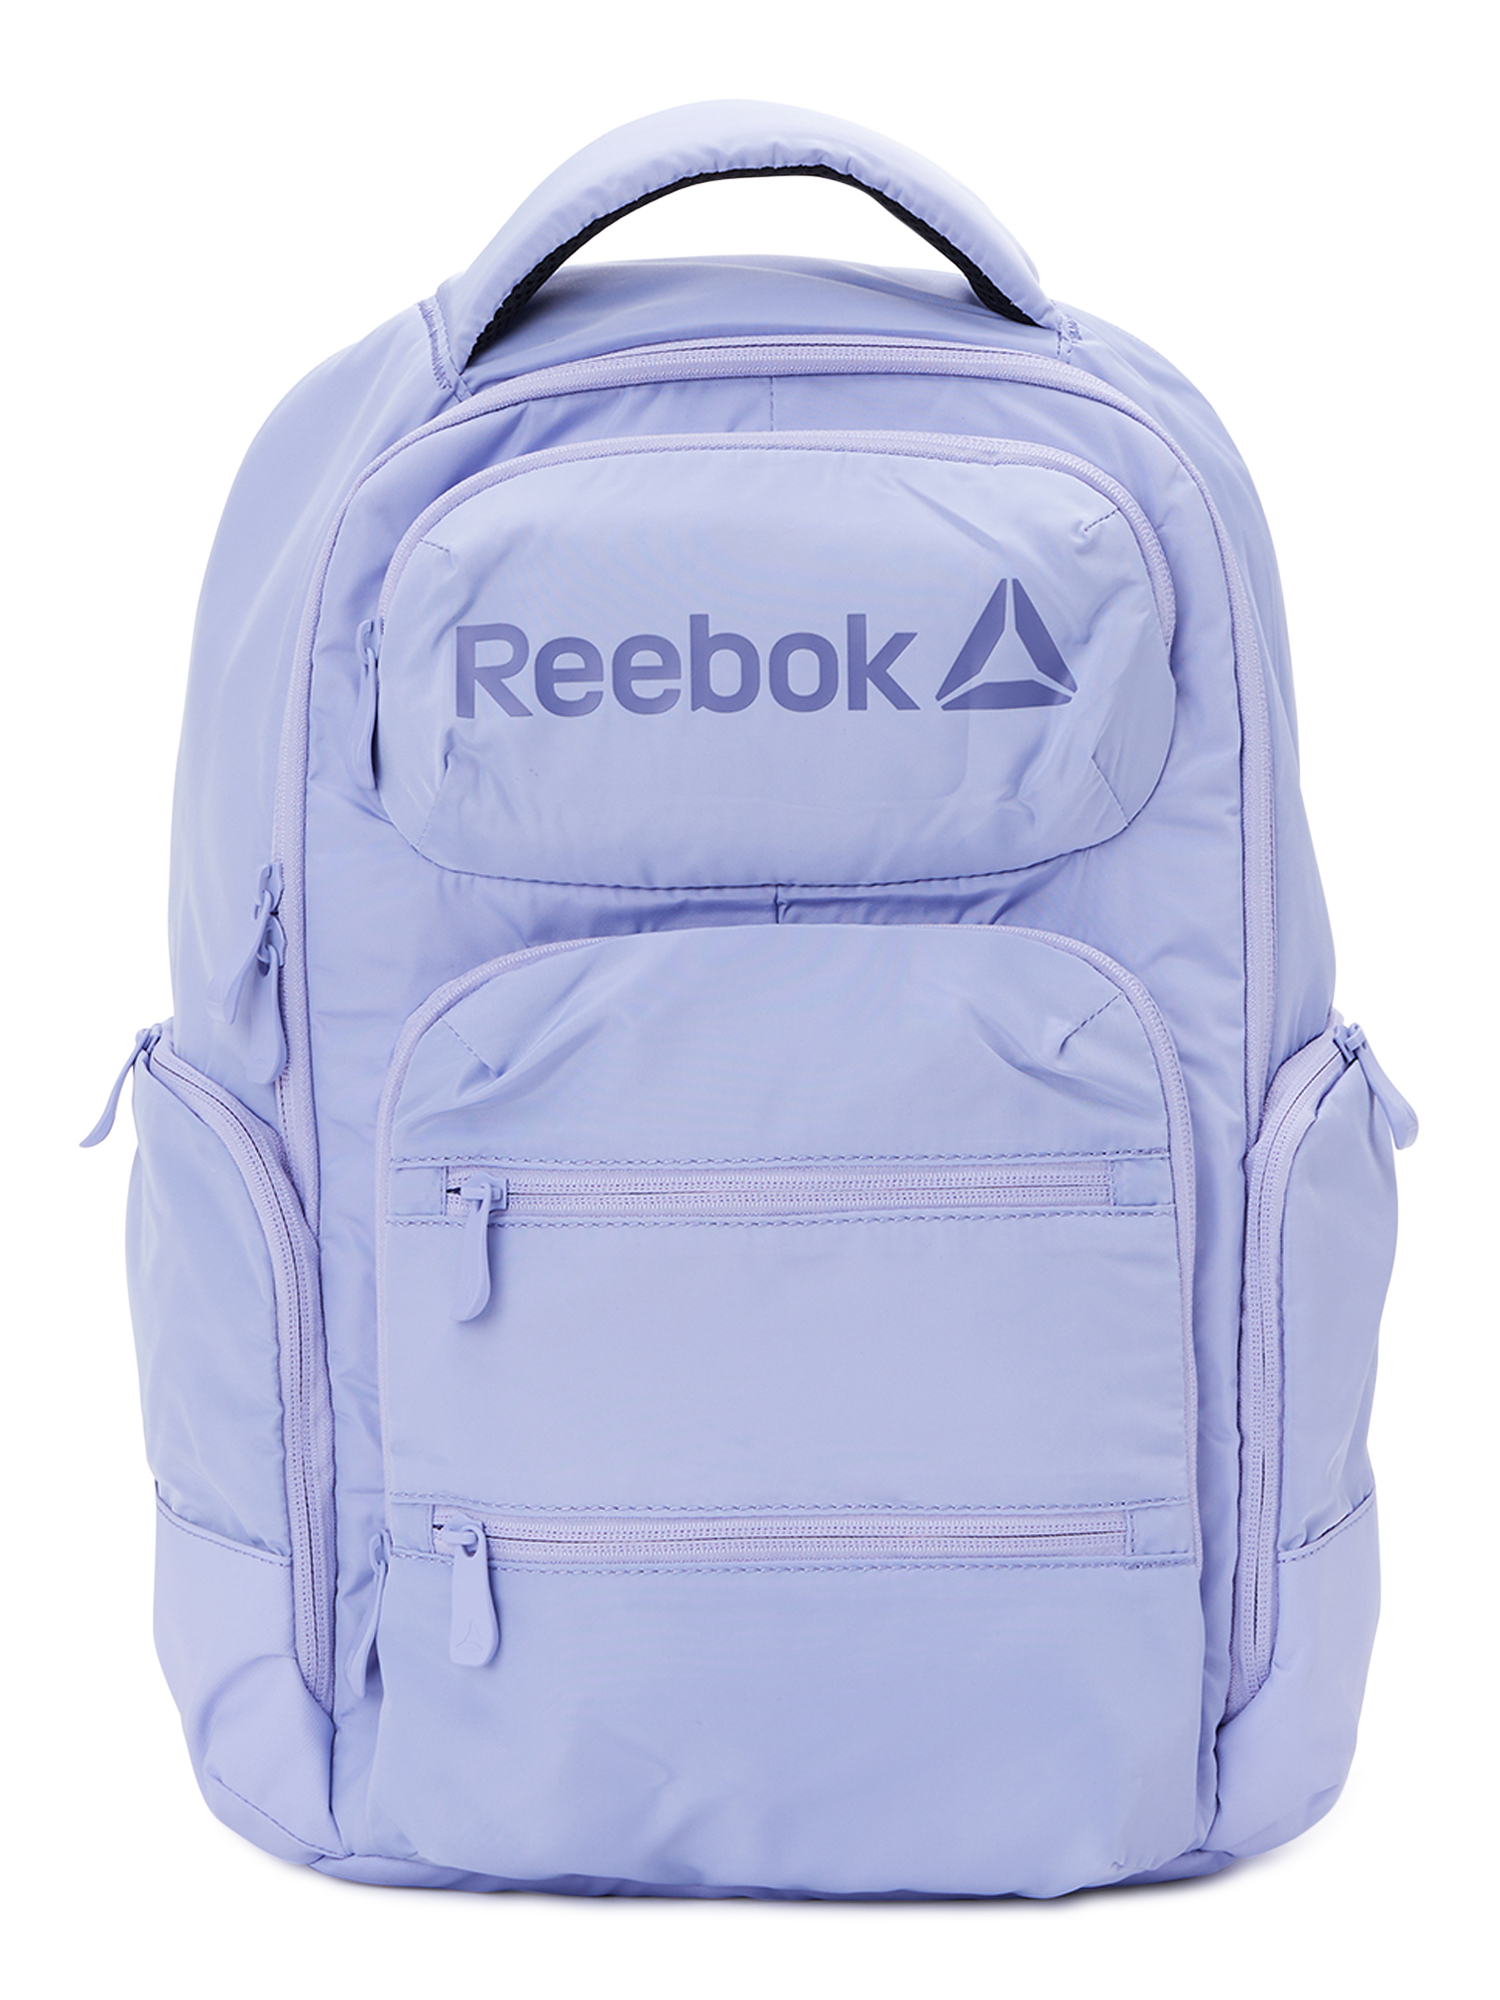 Reebok Unisex Adult Winter 16" Laptop Backpack, Sweet Lavender - image 1 of 5